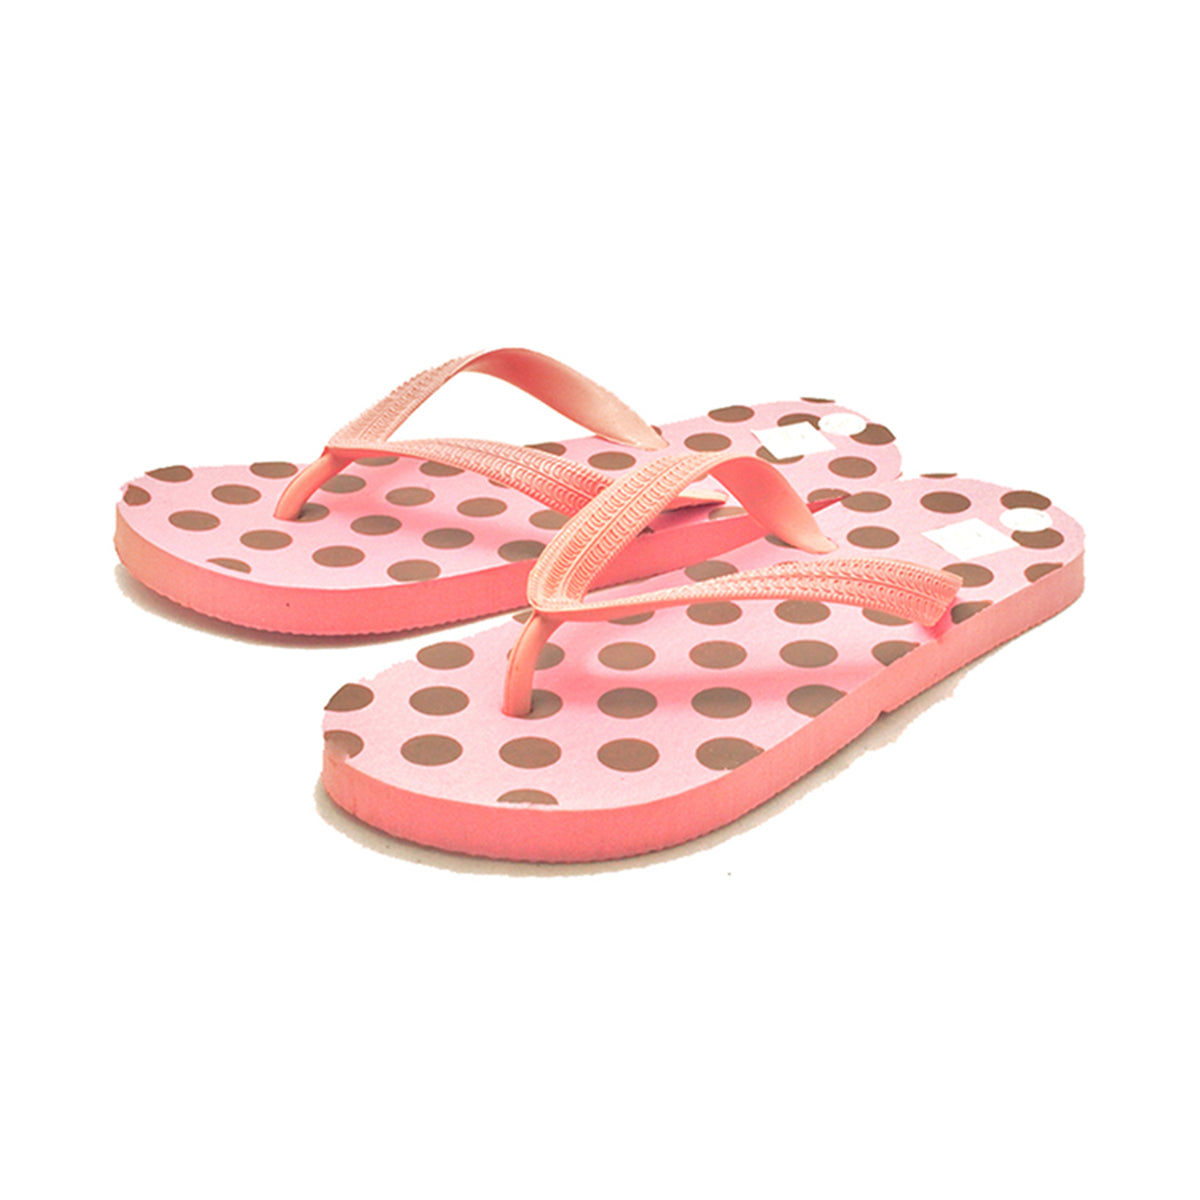 Ladies pink with brown spots comfy toe post flip flop sandals